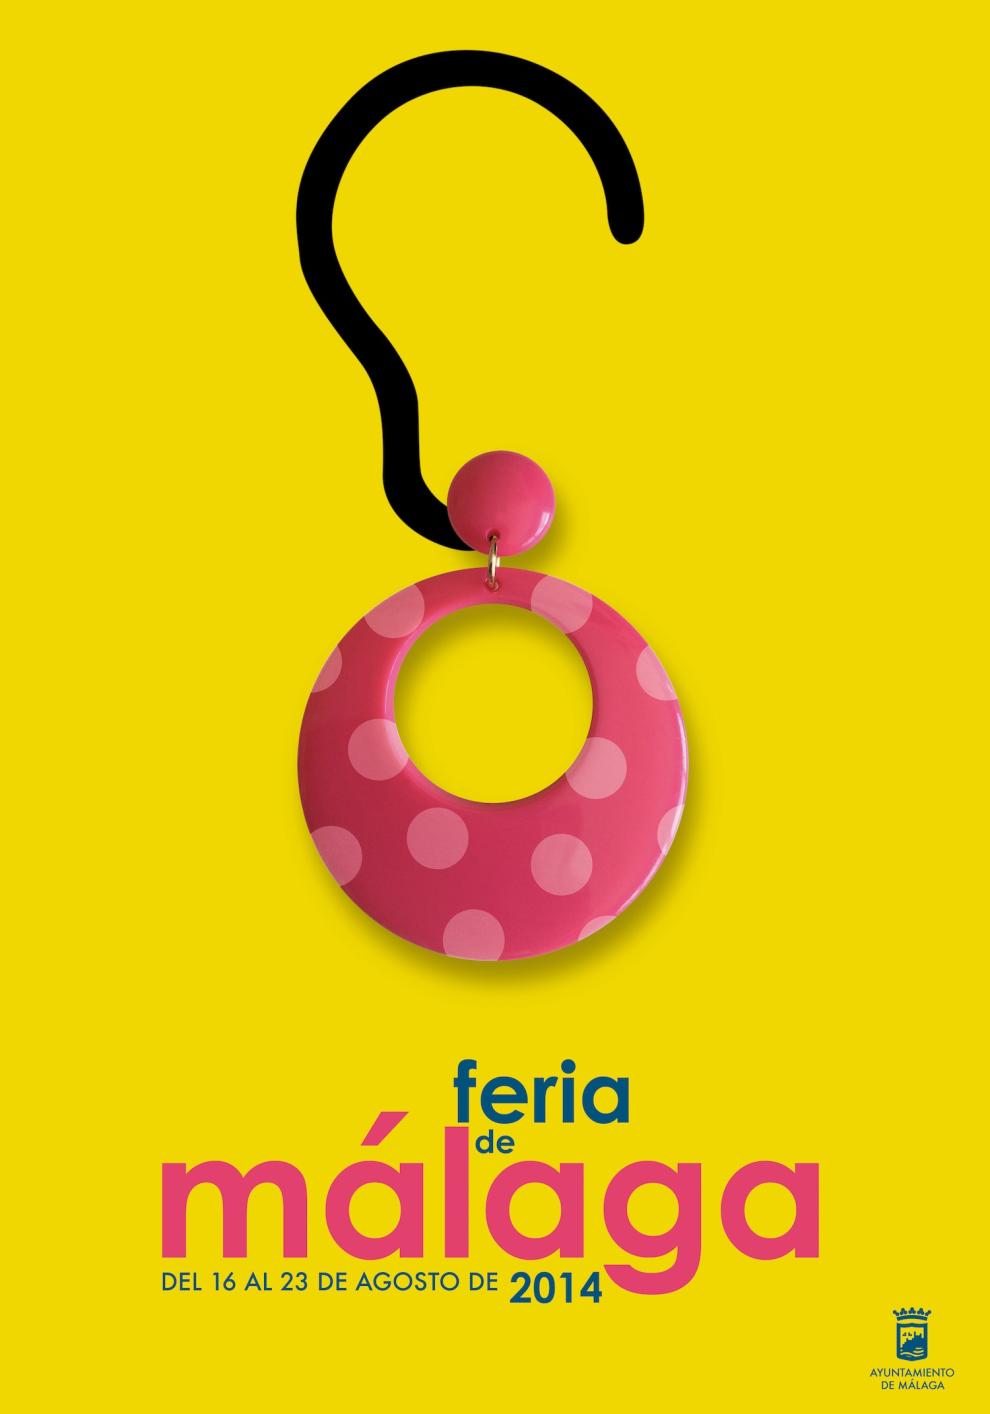 Feria de Malaga 2014, 16th – 23th August